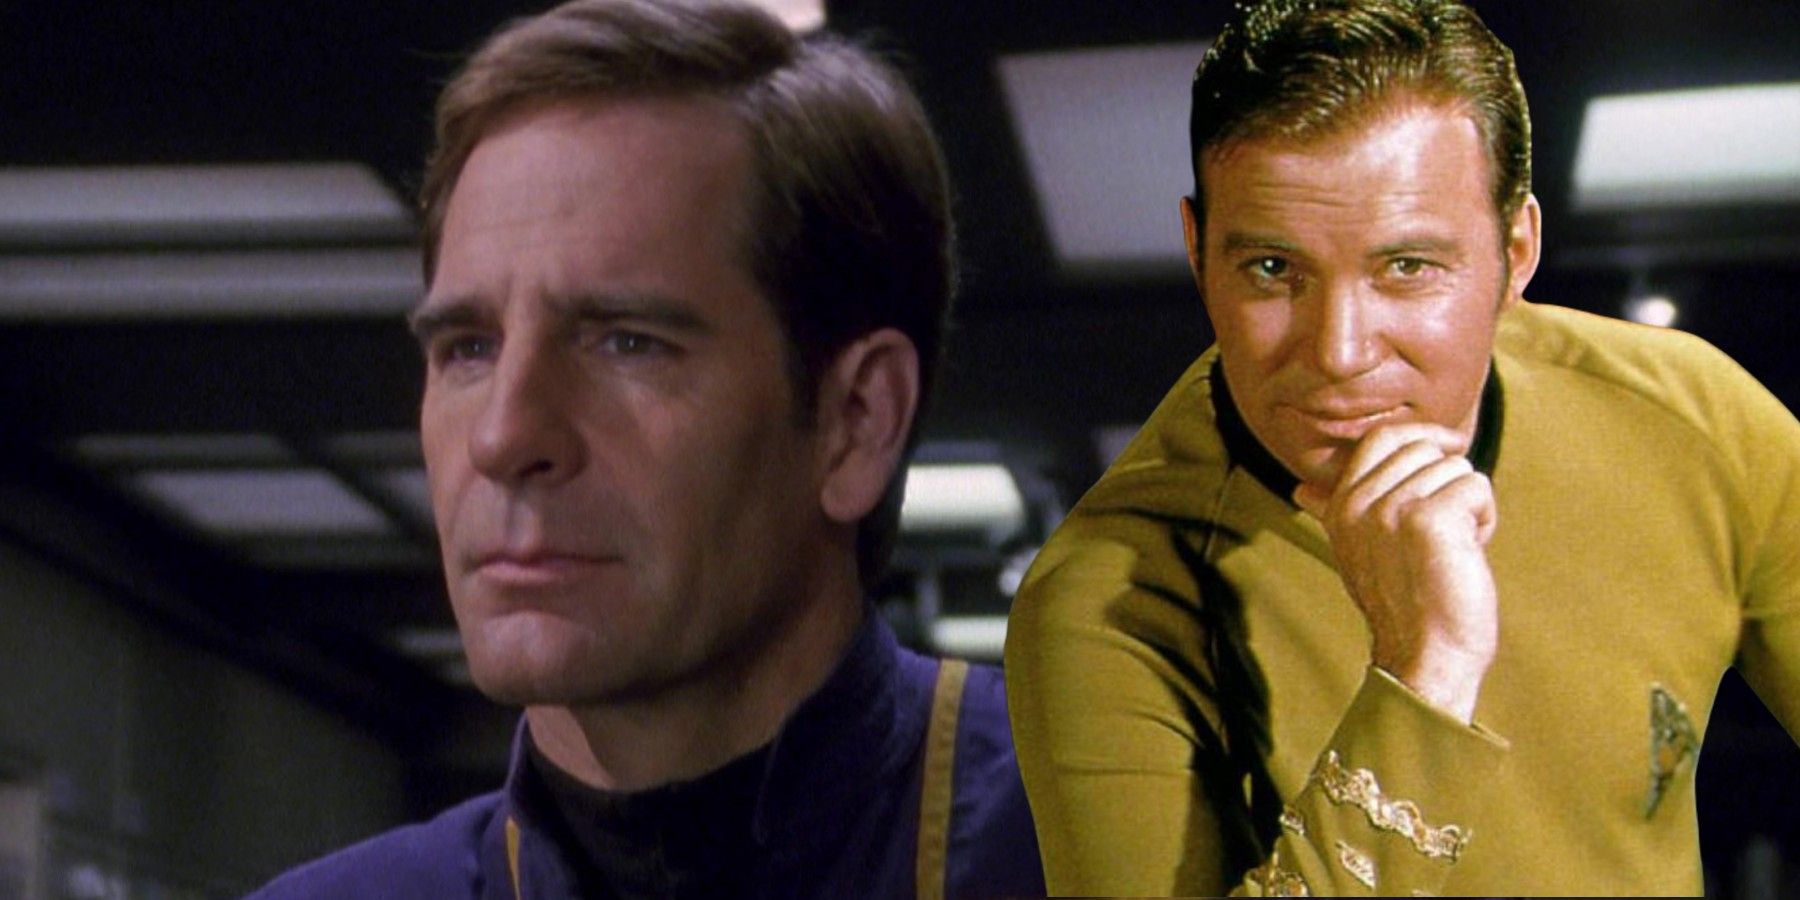 William Shatner as James Kirk and Scott Bakula as Jonathan Archer in Star Trek